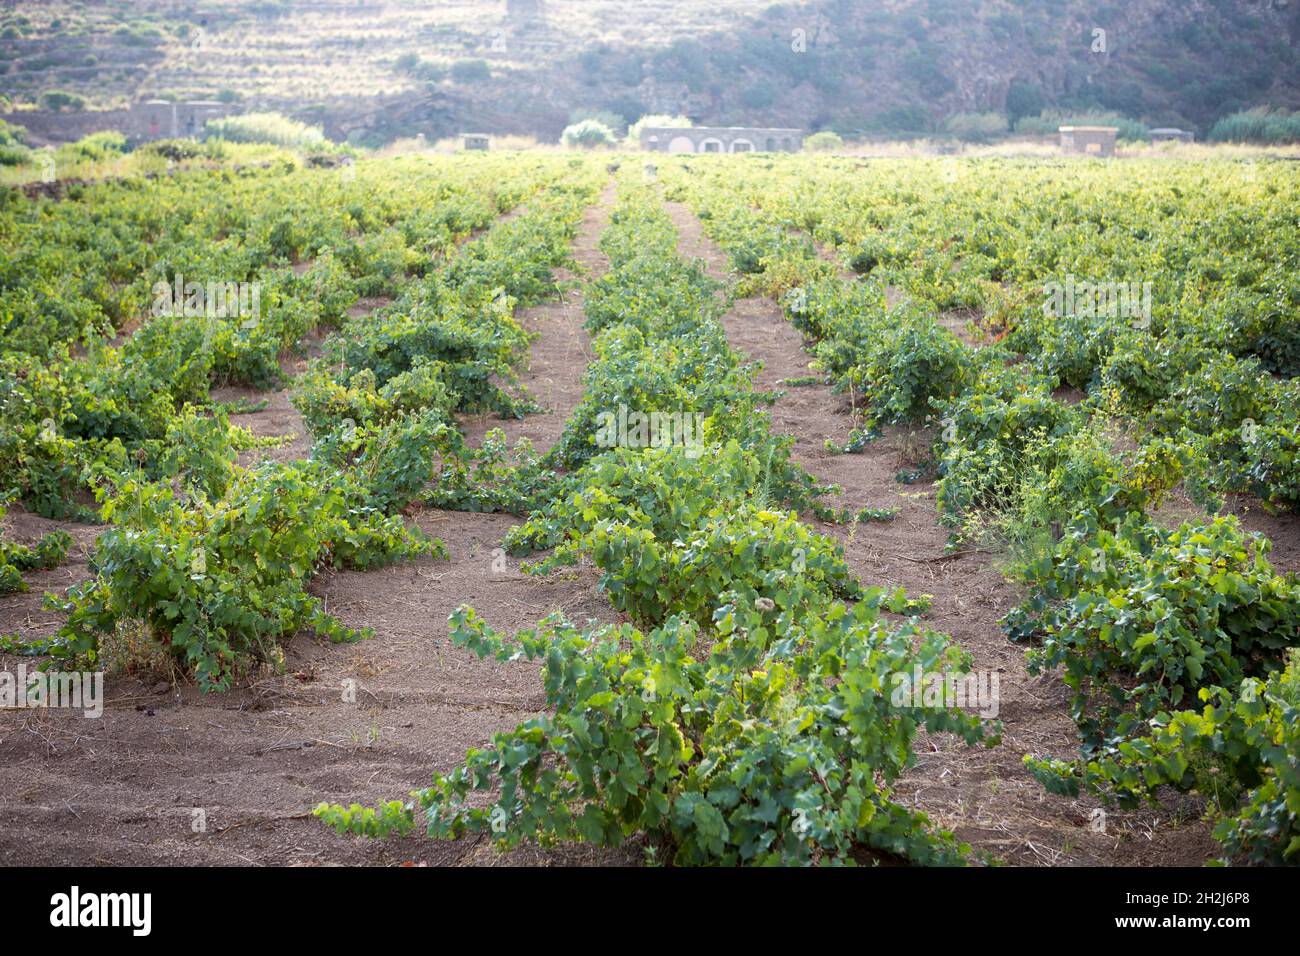 Vineyards in Ghirlanda plain valley in Pantelleria Stock Photo